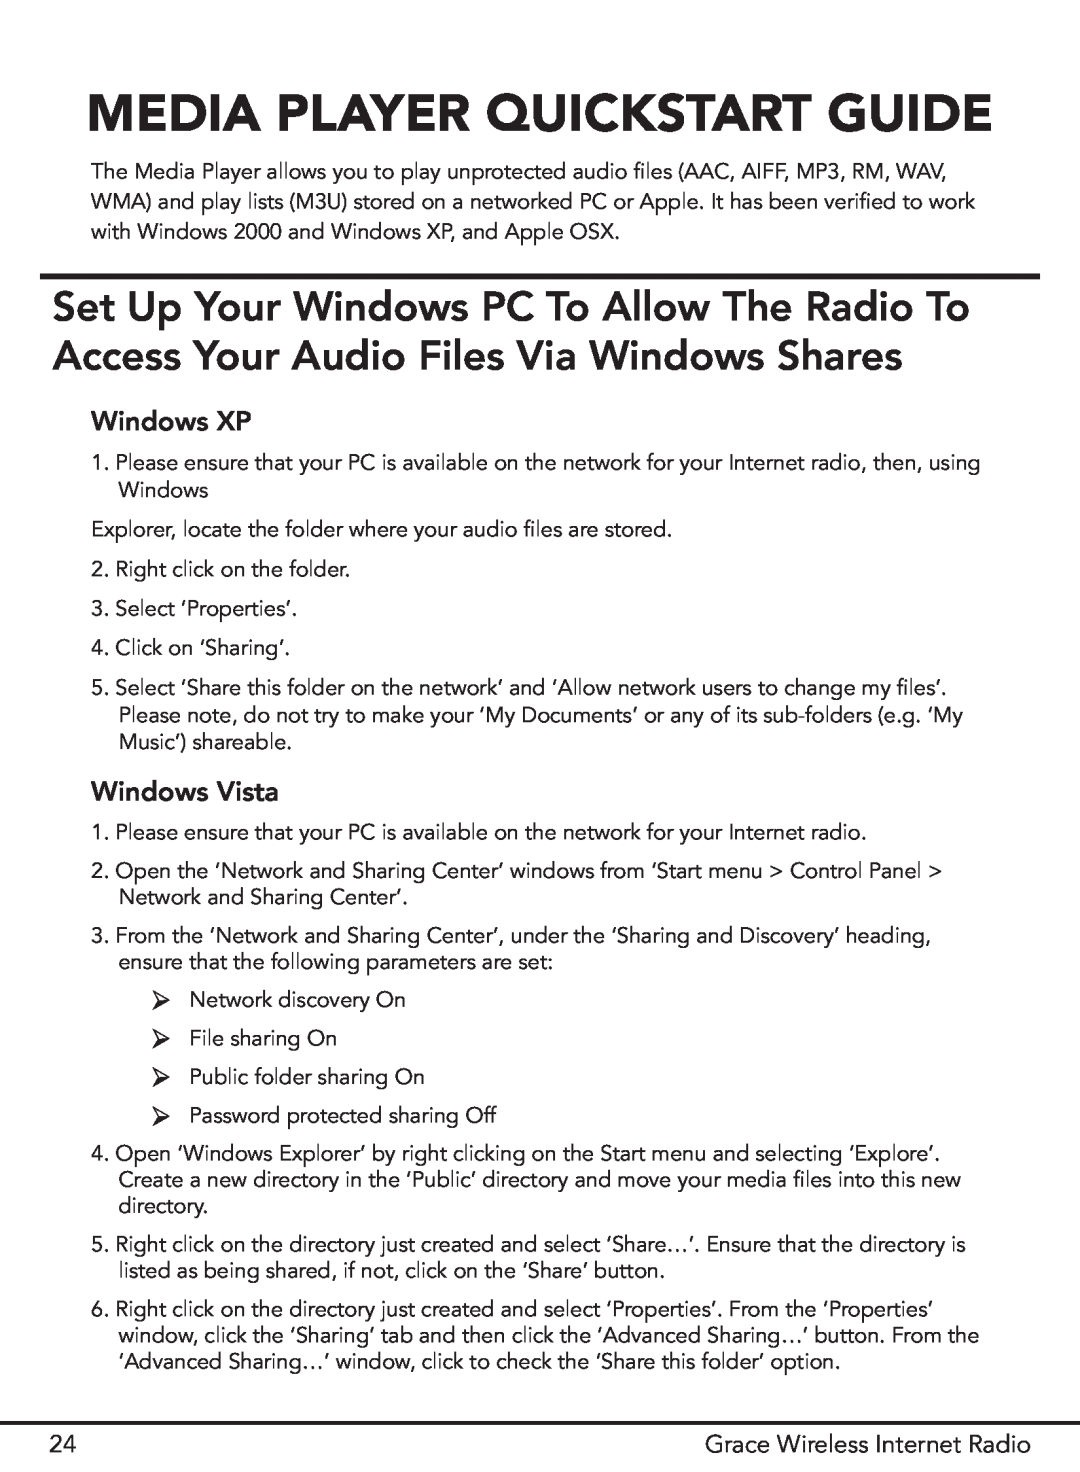 Grace GDI-IR2000 manual Media Player Quickstart Guide, Windows XP, Windows Vista 